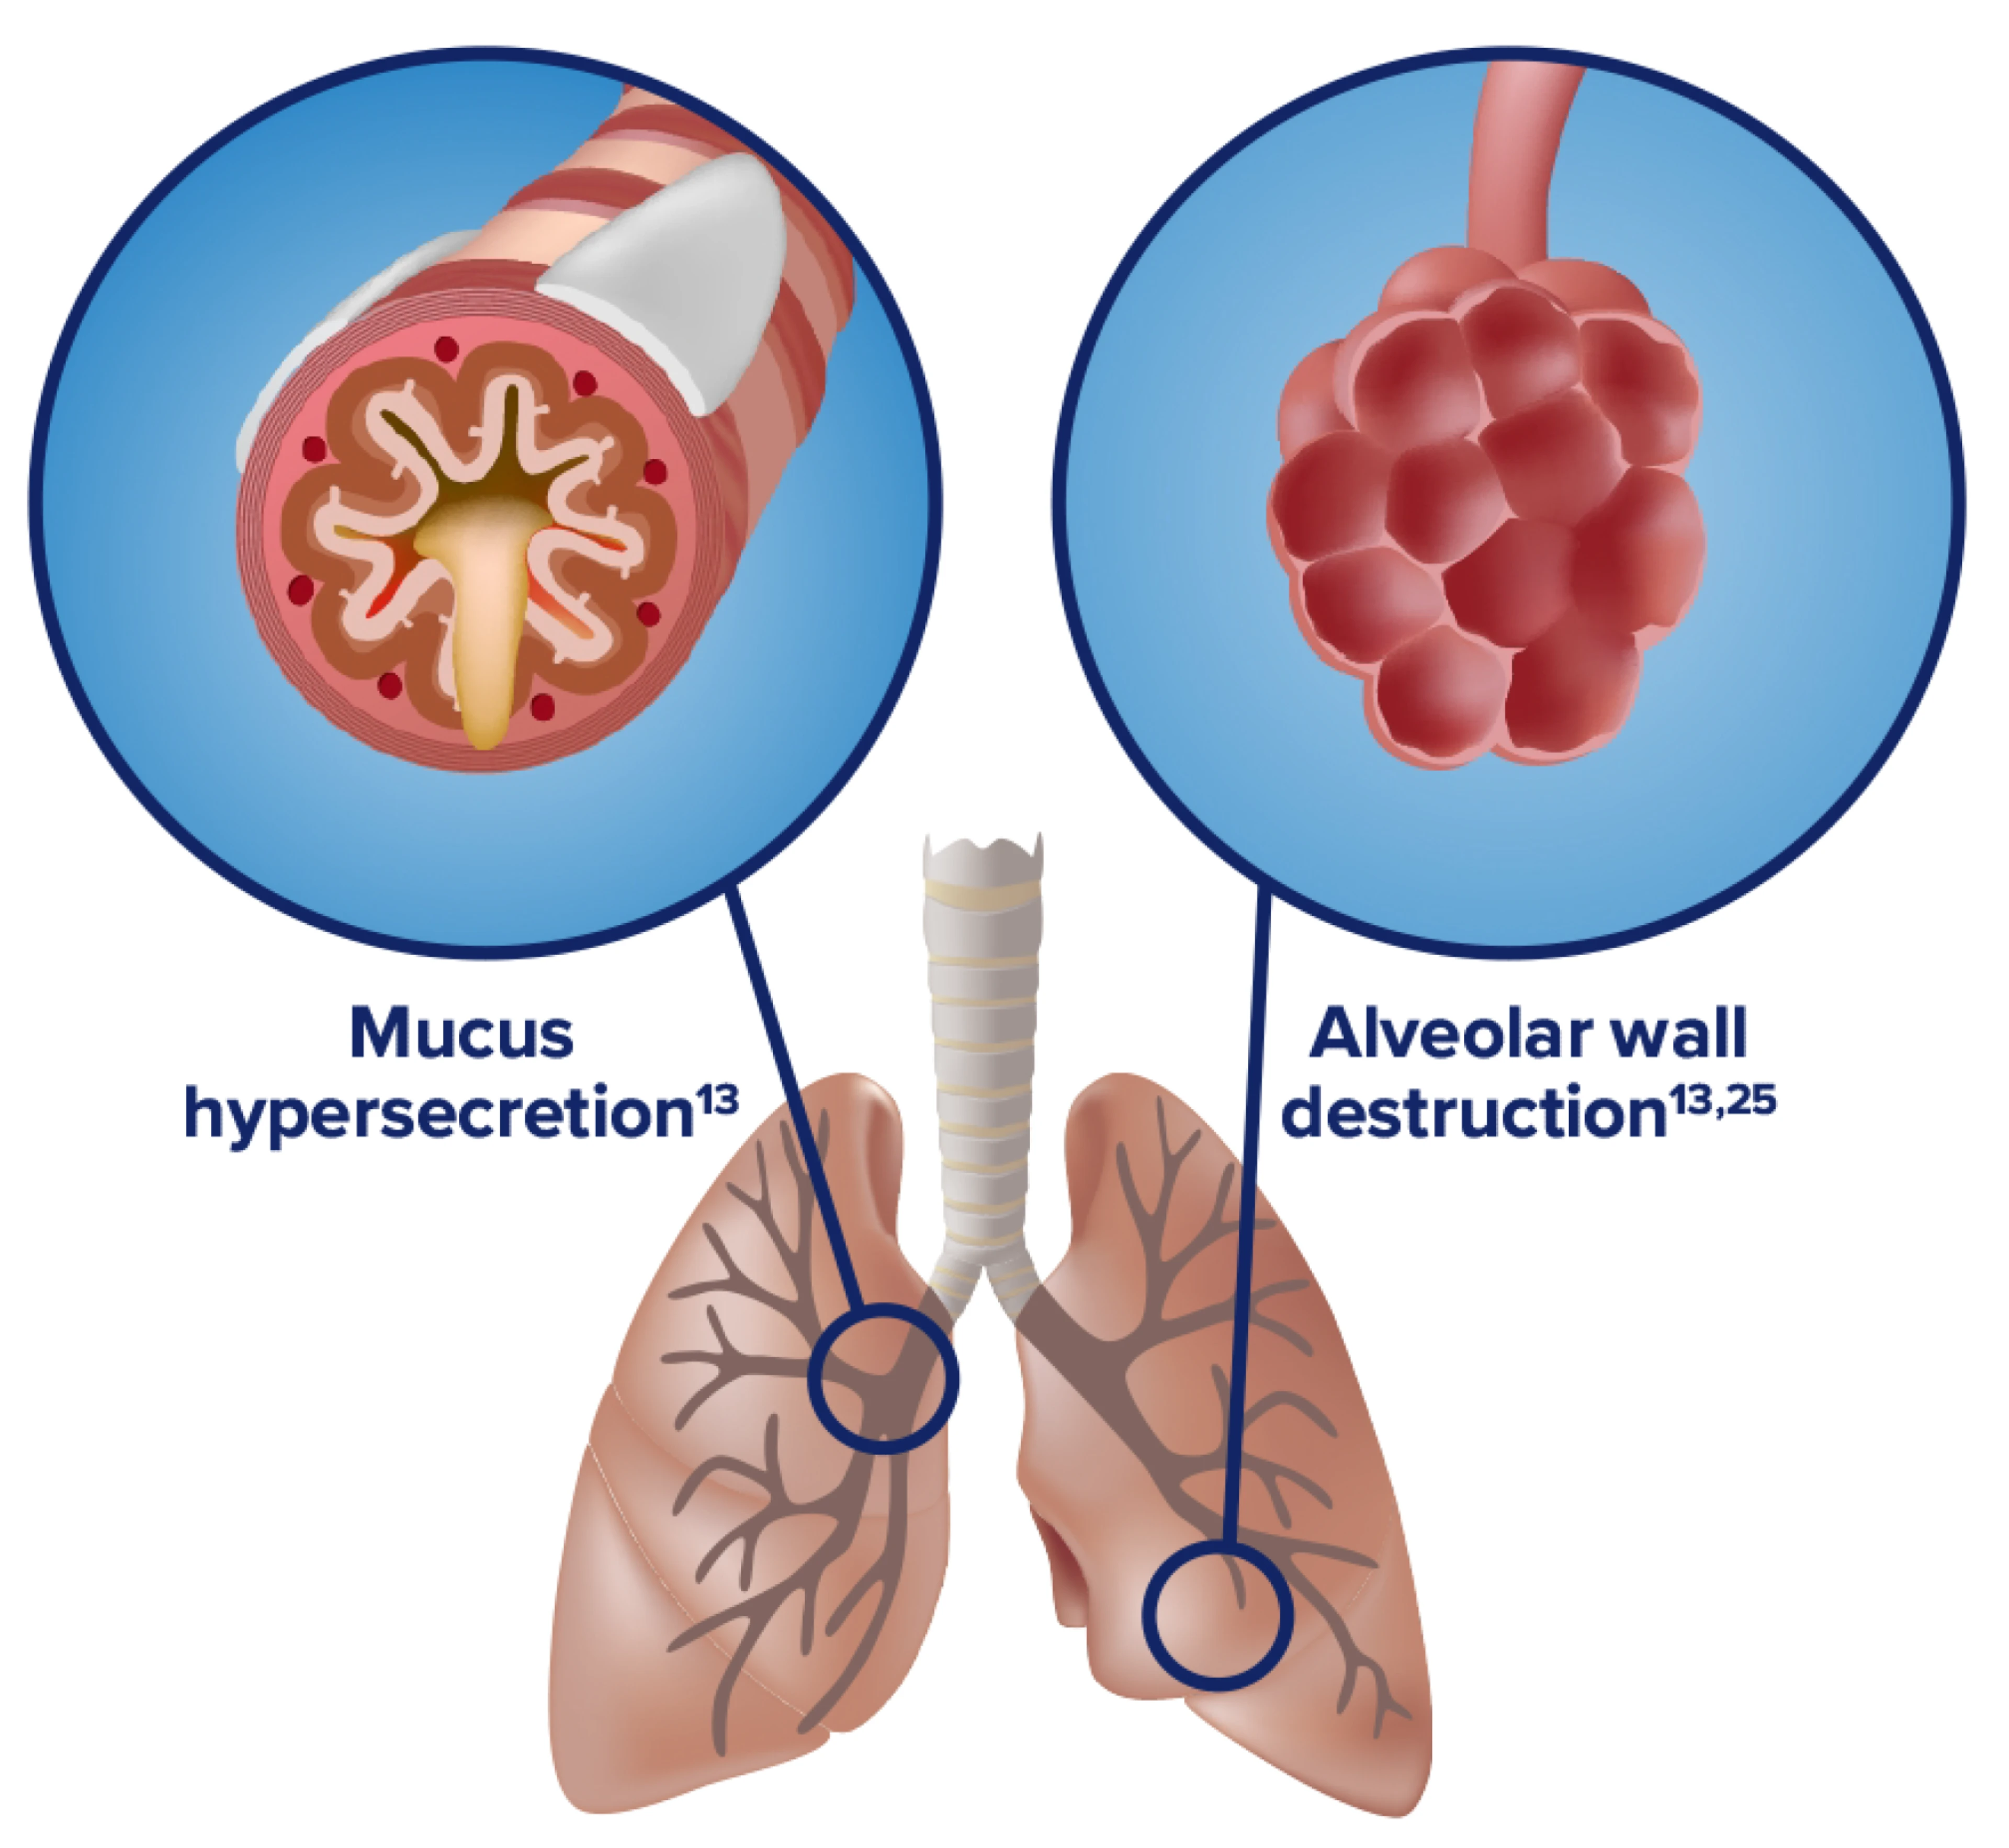 Mucus hypersecretion and Alveolar wall destruction